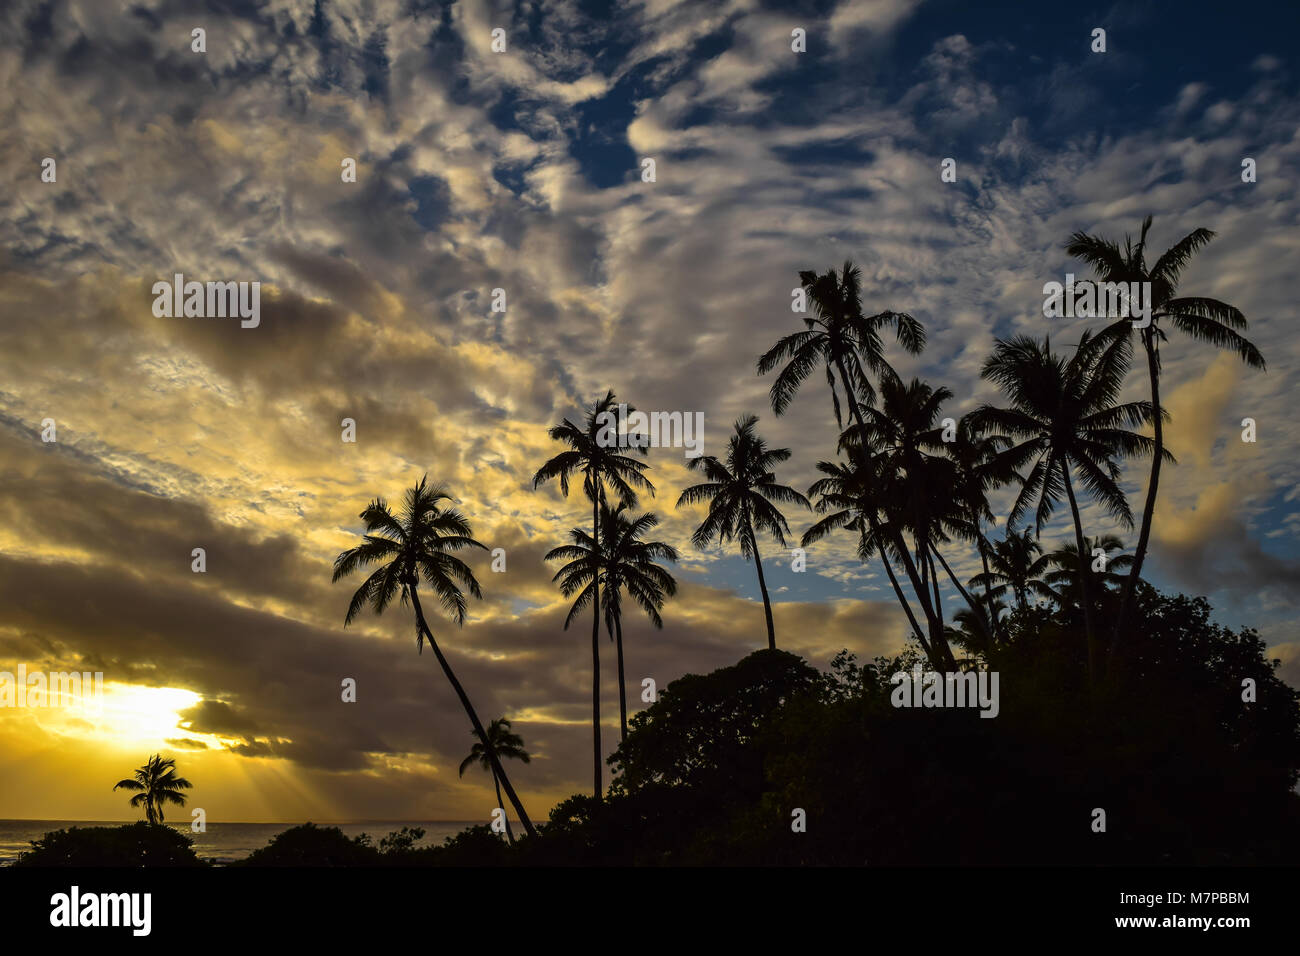 Palm tree silhouettes against a cloudy sunset sky, 'Eua, Tonga Stock Photo